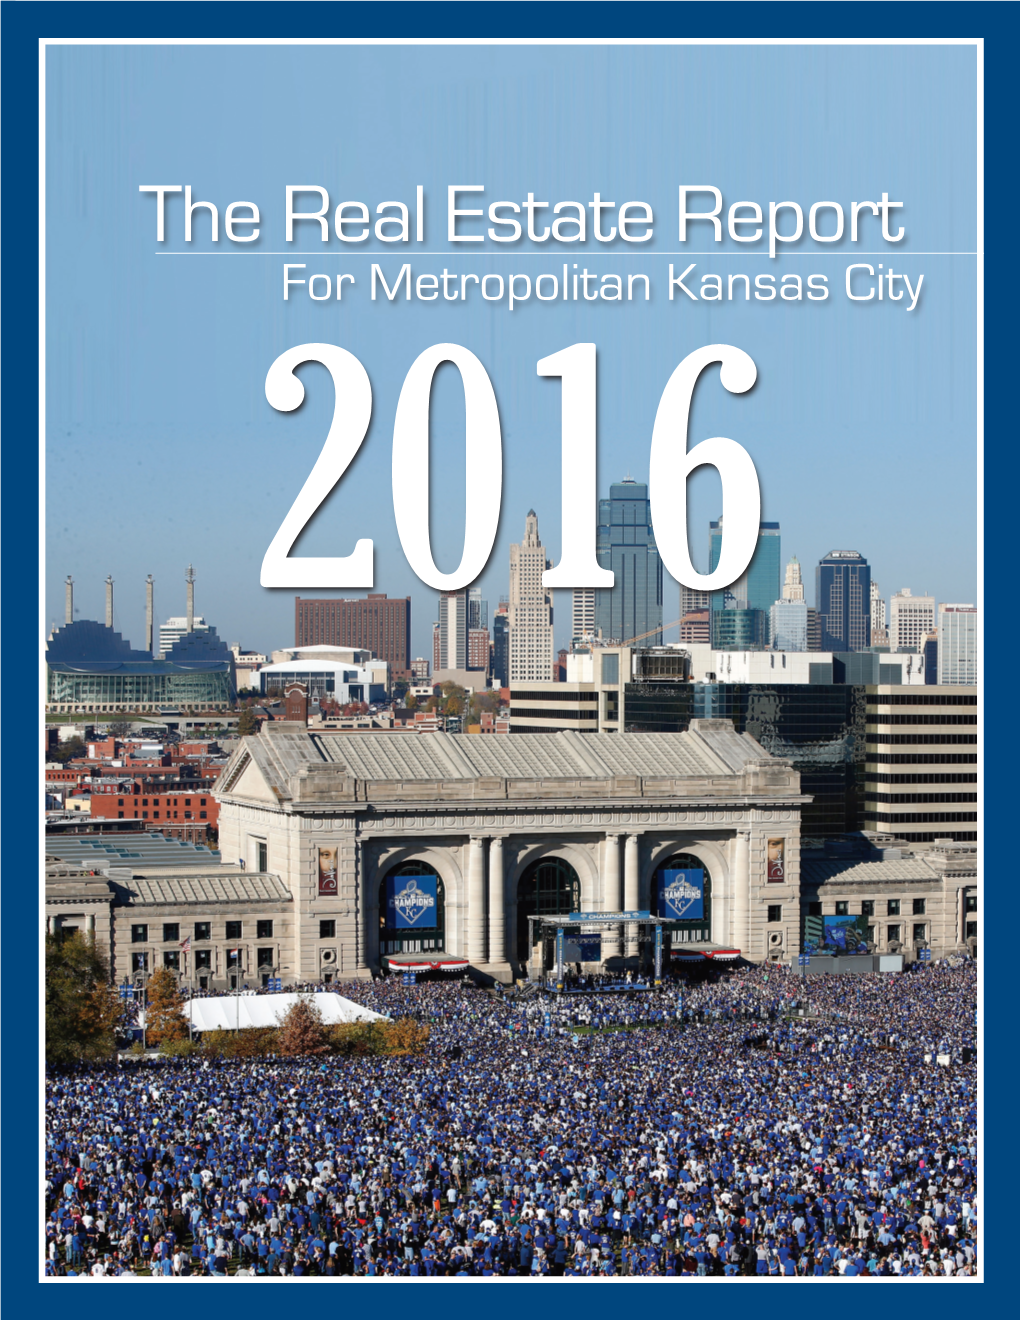 The Real Estate Report for Metropolitan Kansas City 2016